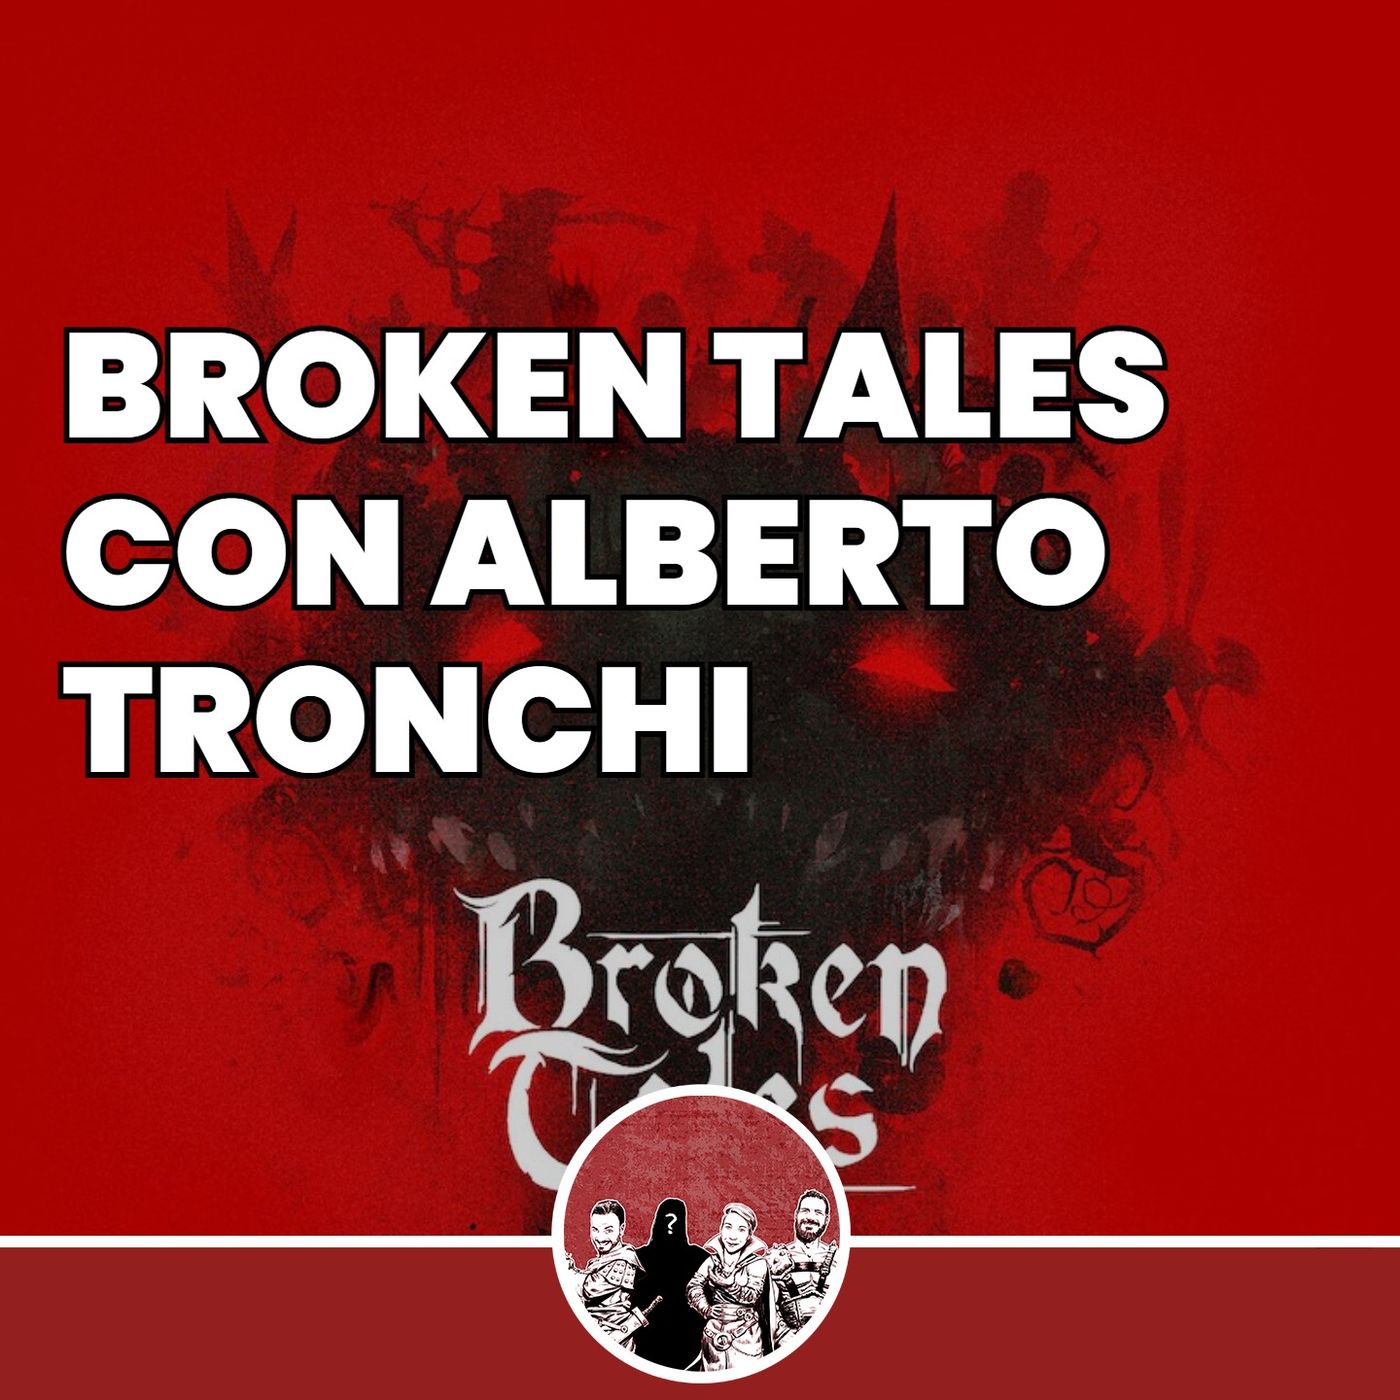 Broken Tales con Alberto Tronchi (Black Box Games)